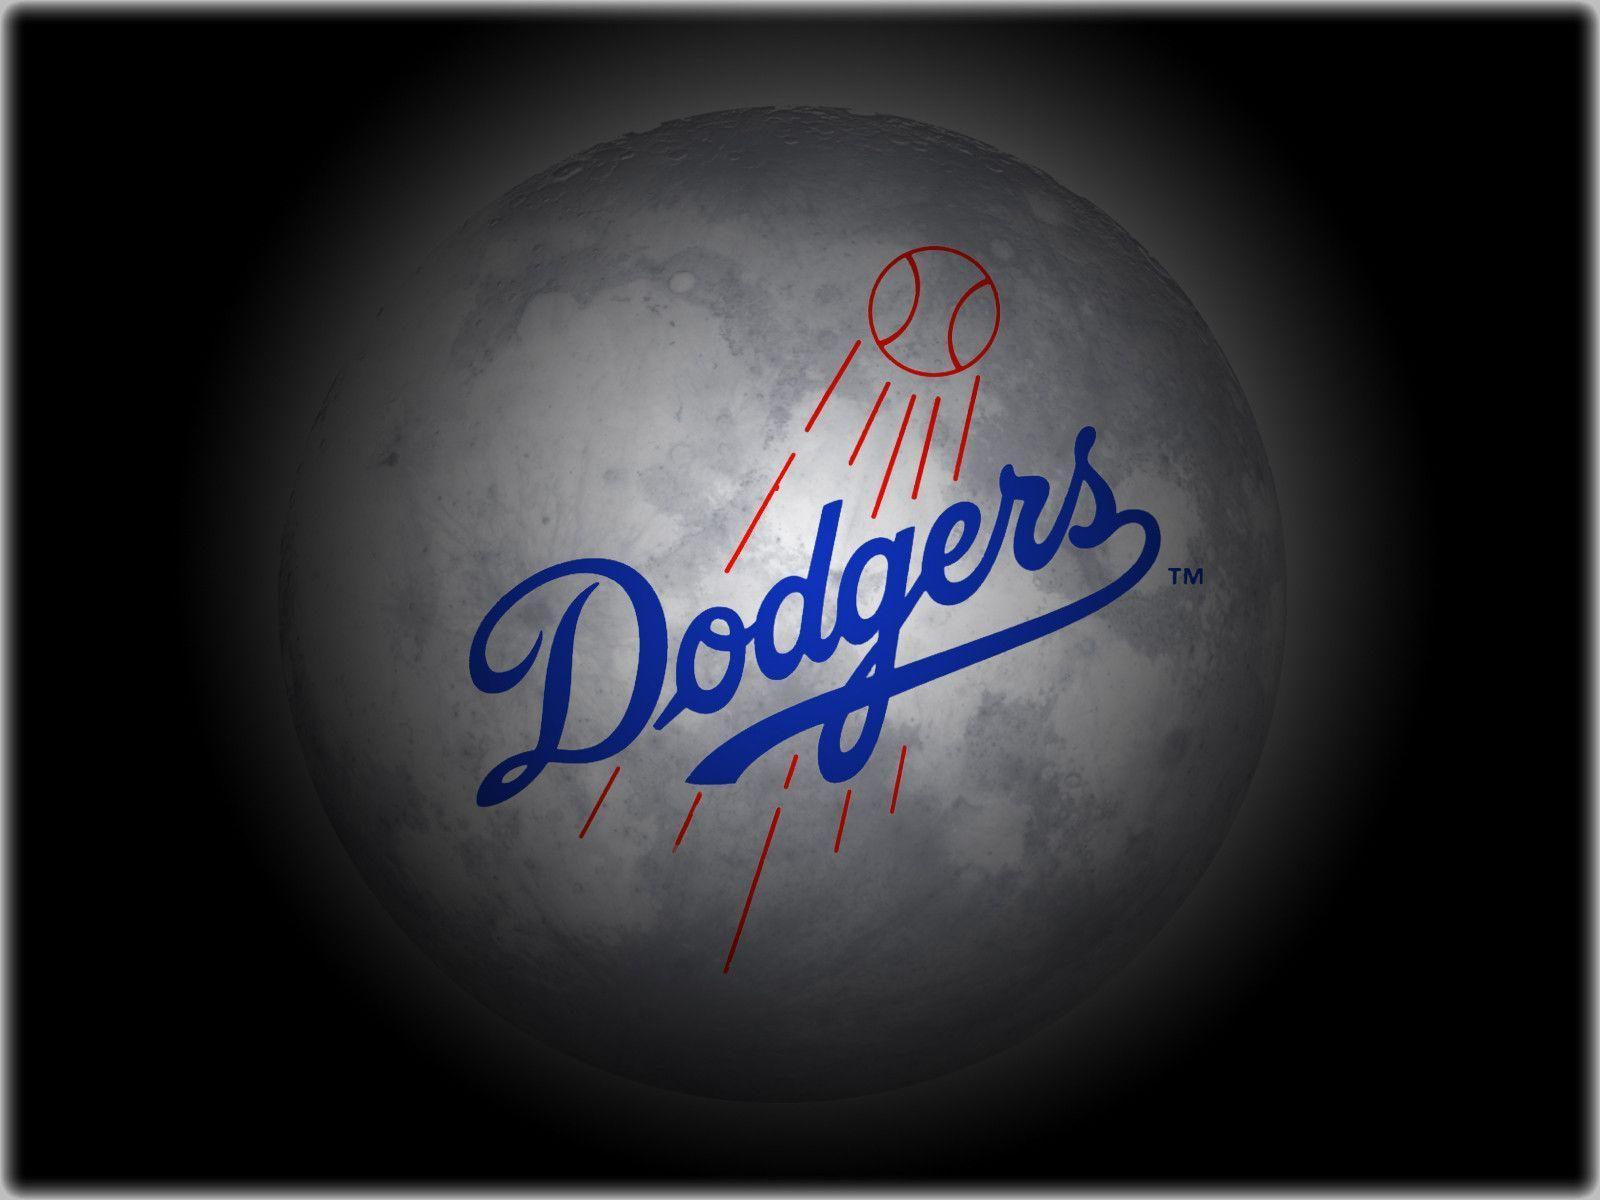 Los Angeles Dodgers wallpaper. Los Angeles Dodgers background